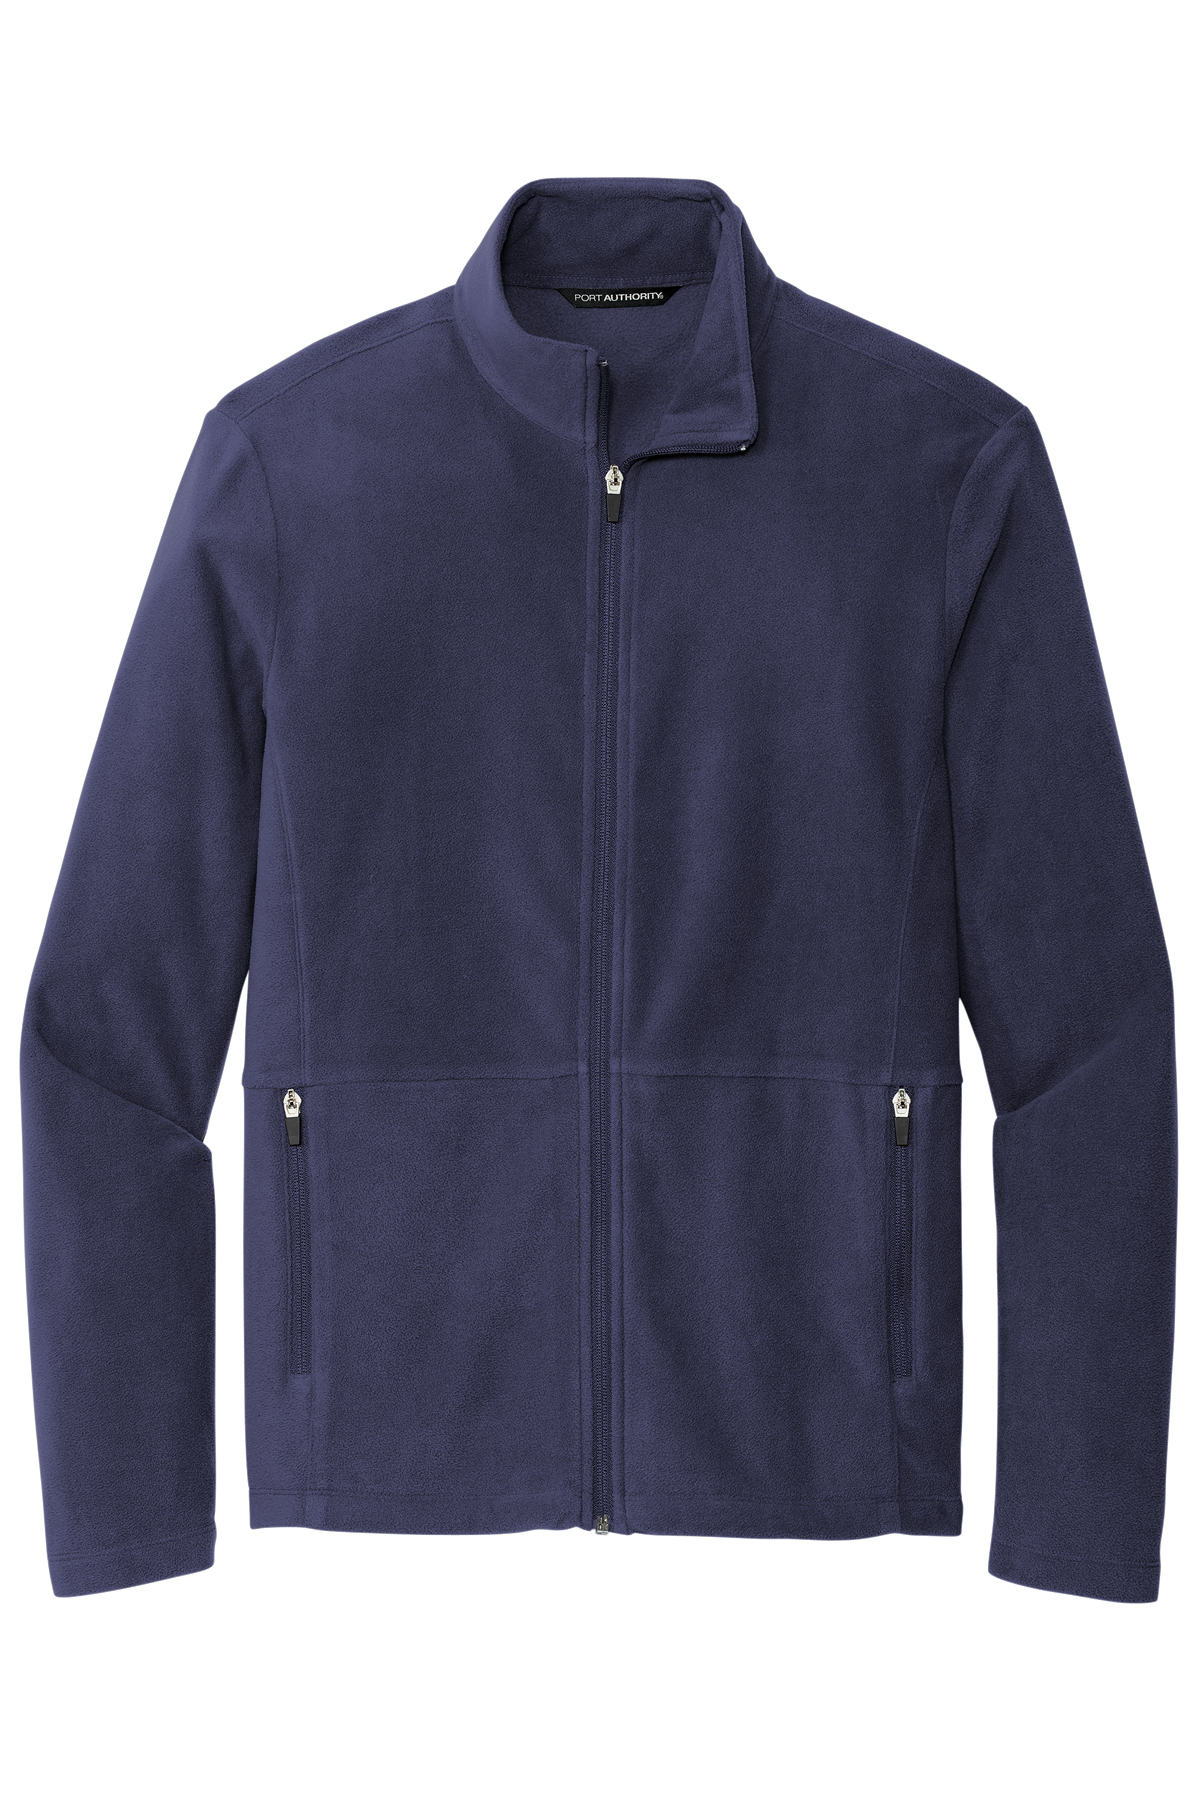 Colorado Clothing 8287 Bear Creek Heavyweight Microfleece Jacket